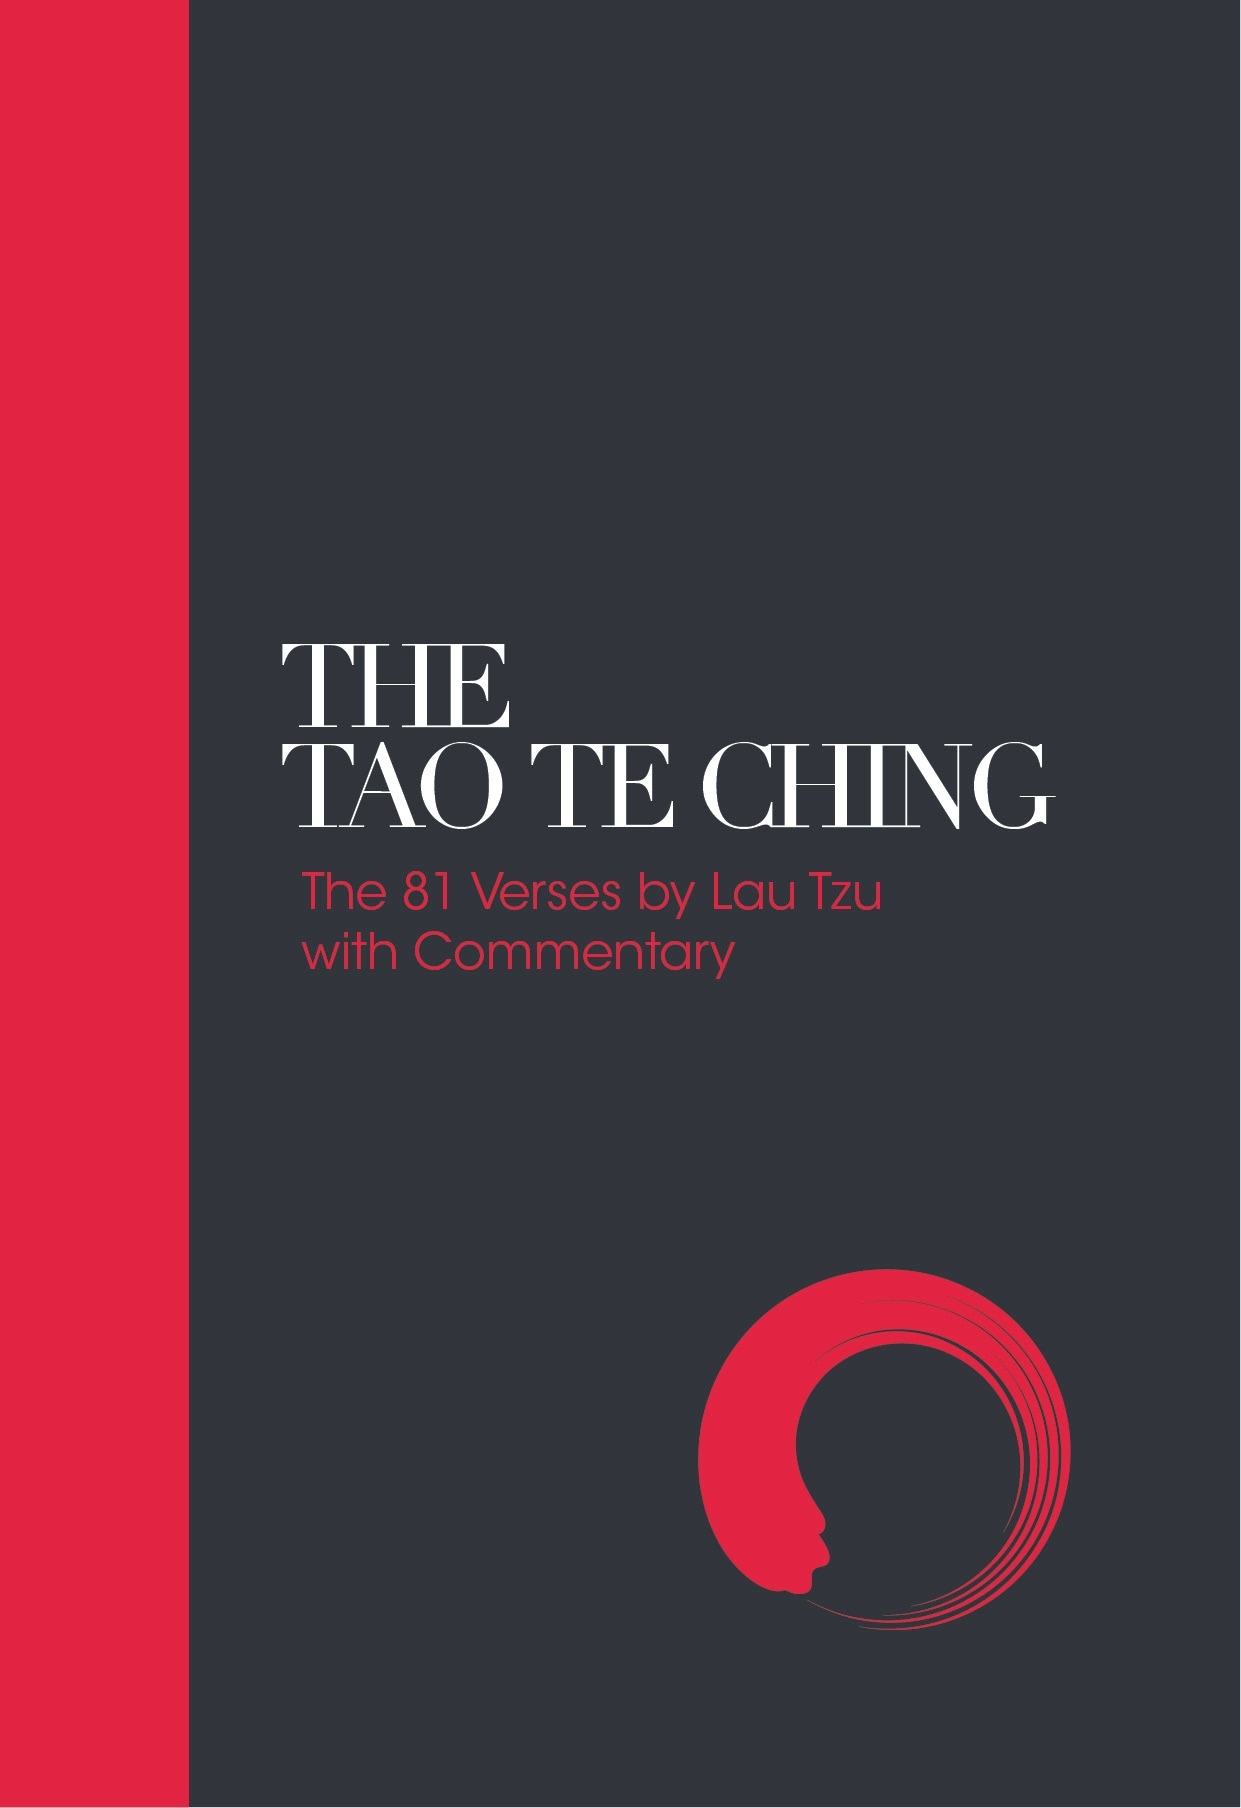 The Tao Te Ching by Lao Tzu - Penguin Books Australia